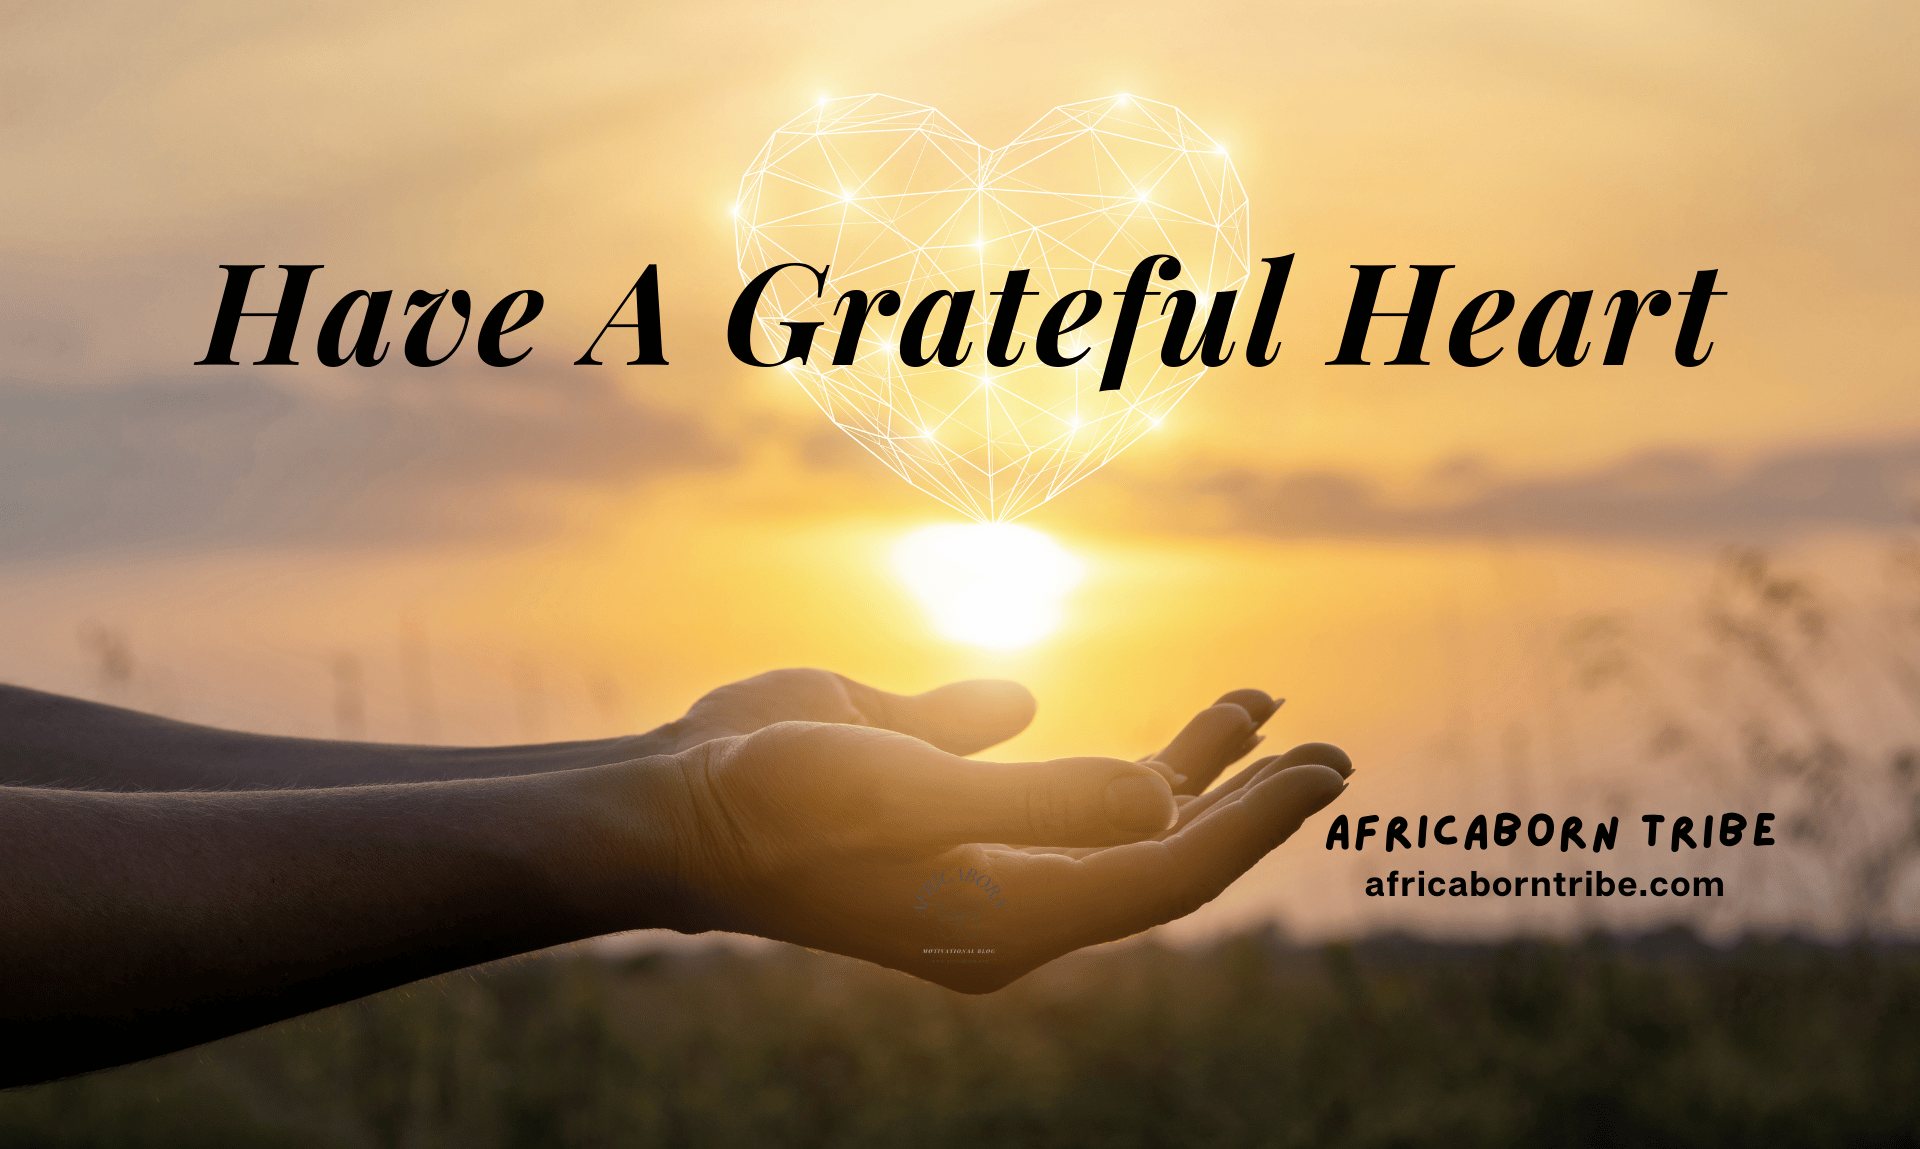 Have a grateful heart